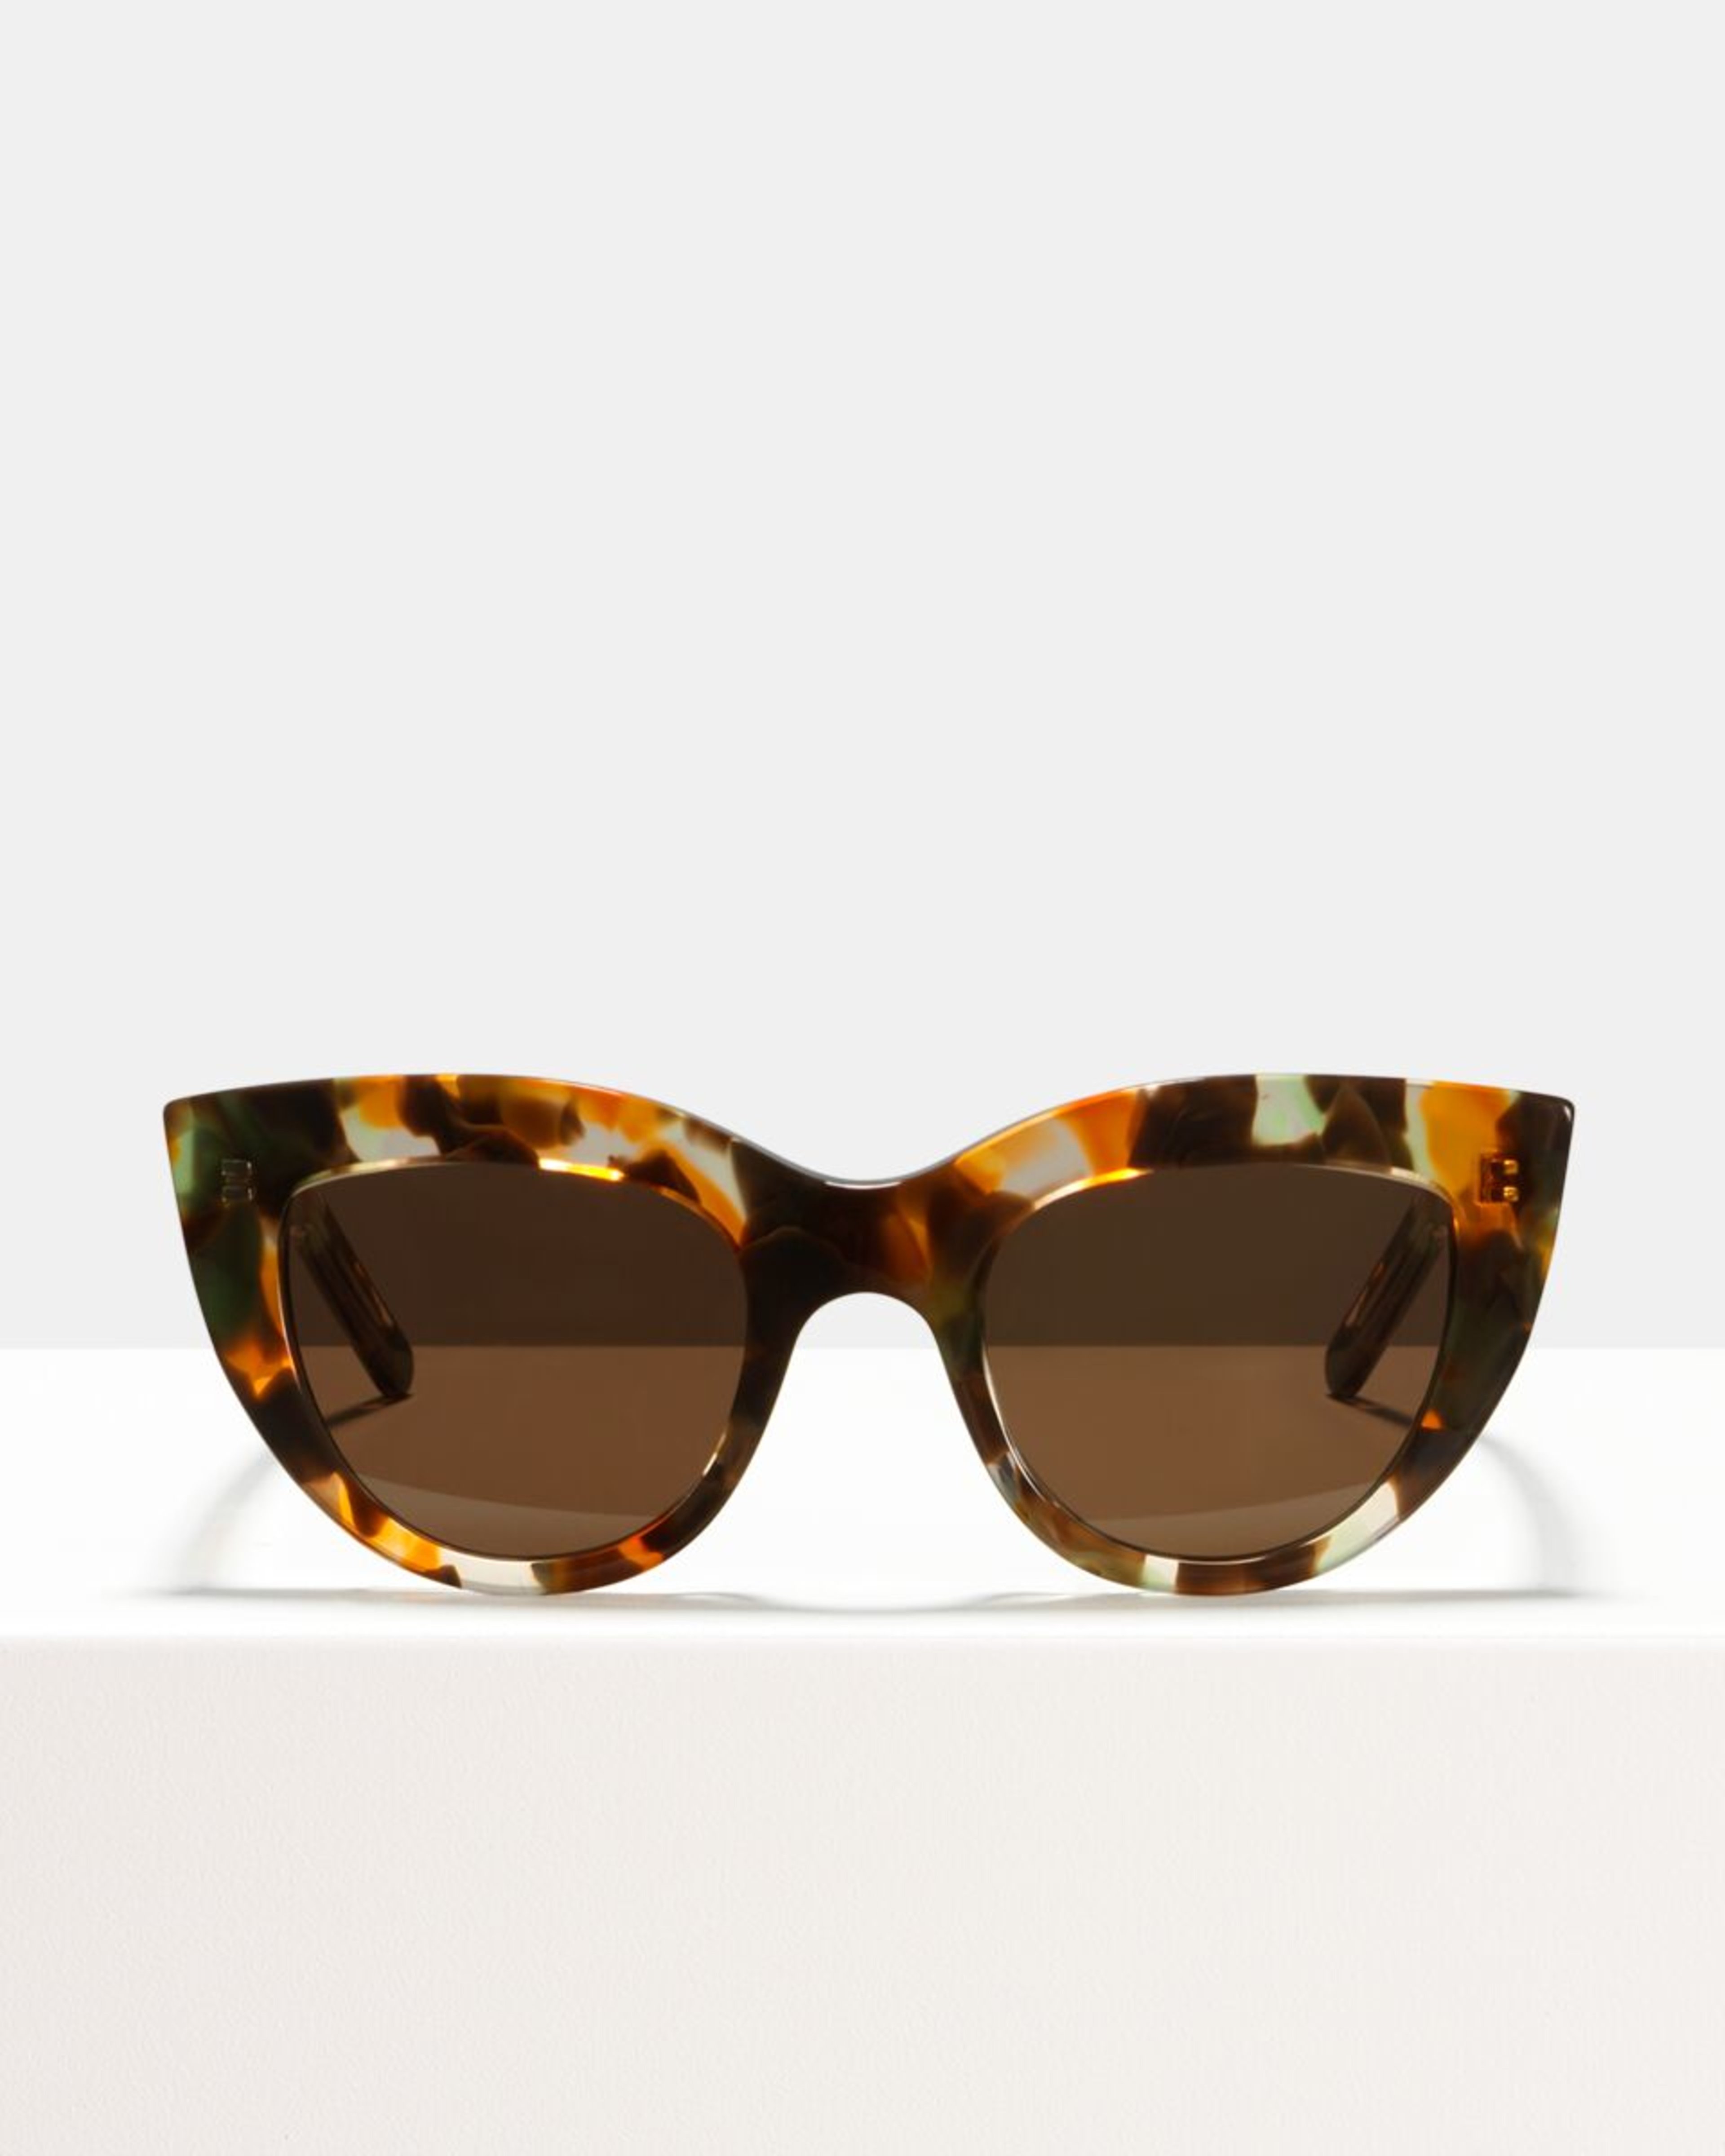 Ace & Tate Gafas de sol |  acetato in Marrón, Verde, Naranja